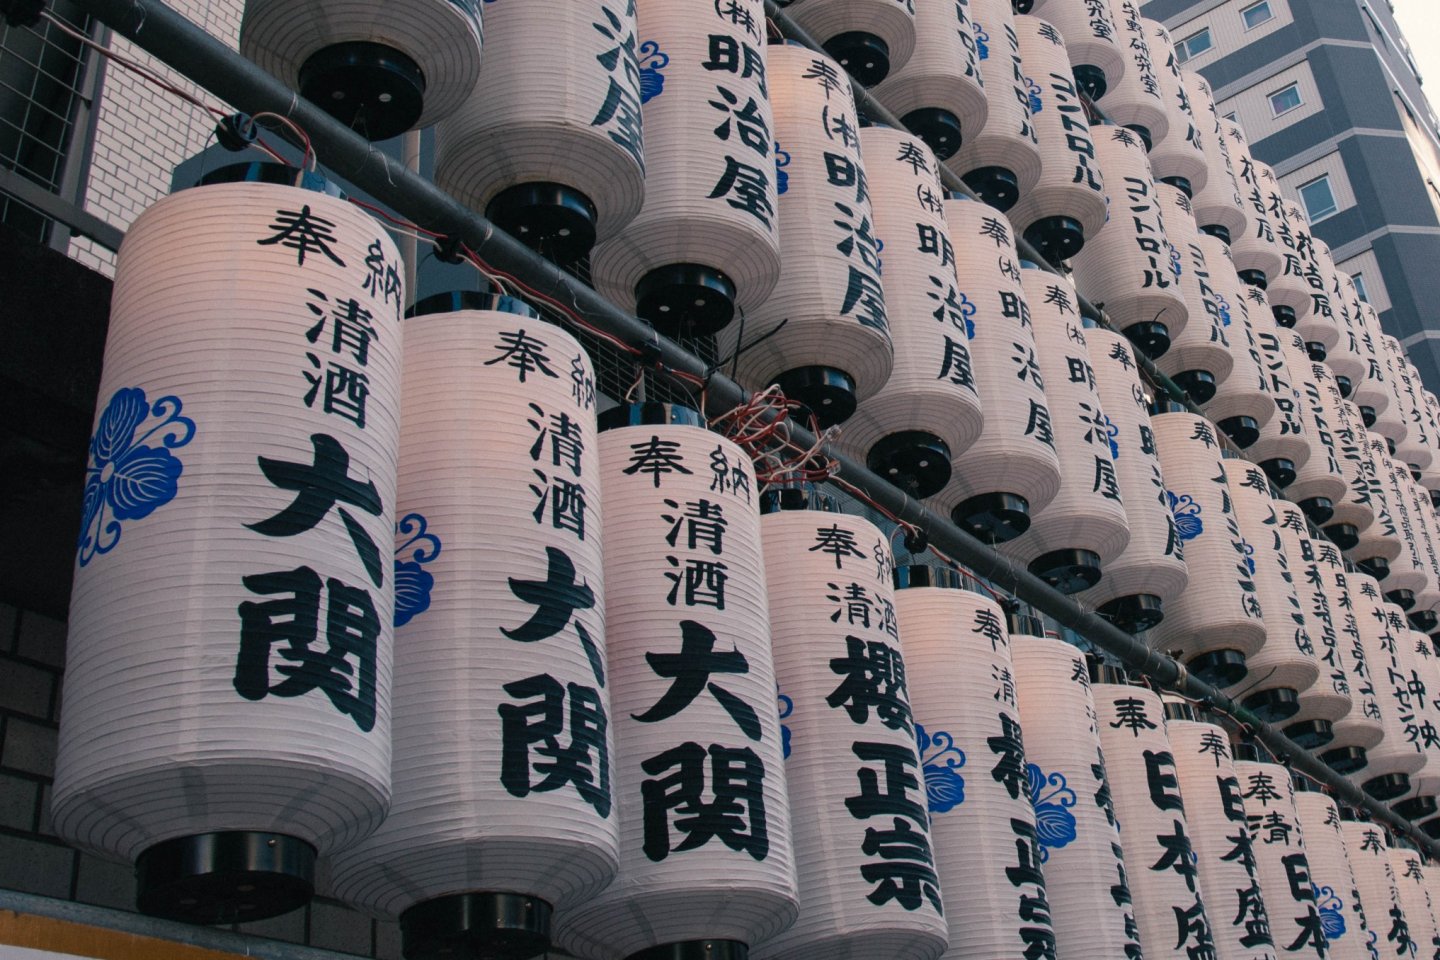 Lanterns are lined up around the streets surrounding the Takarada Ebisu Jinja Shrine.